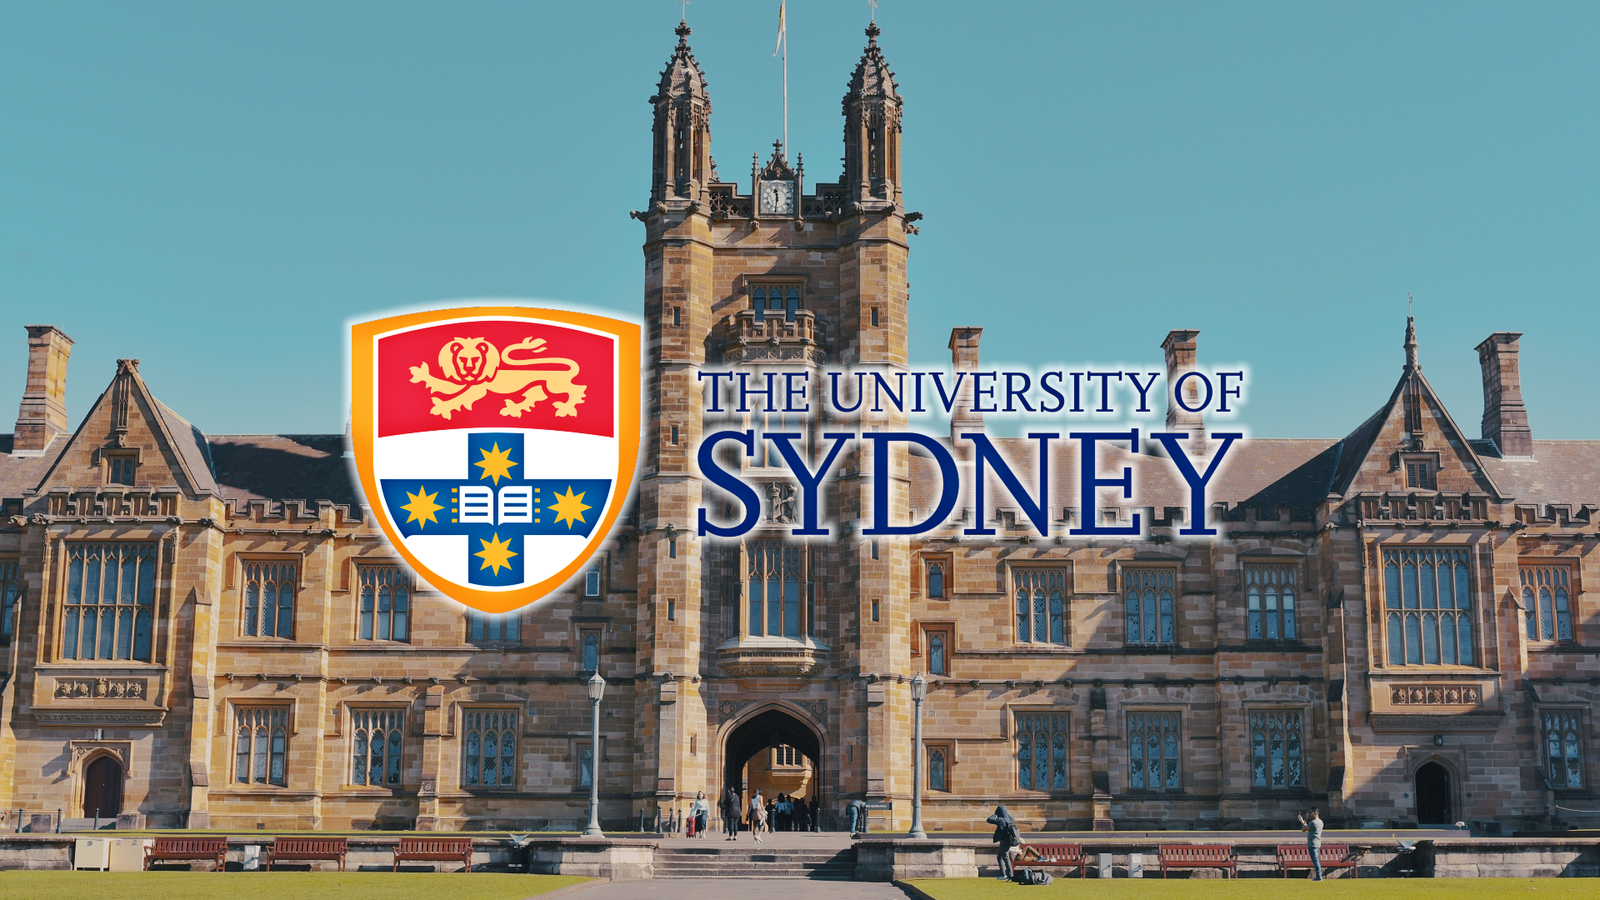 University of Sydney data breach impacts recent applicants – Source: www.bleepingcomputer.com